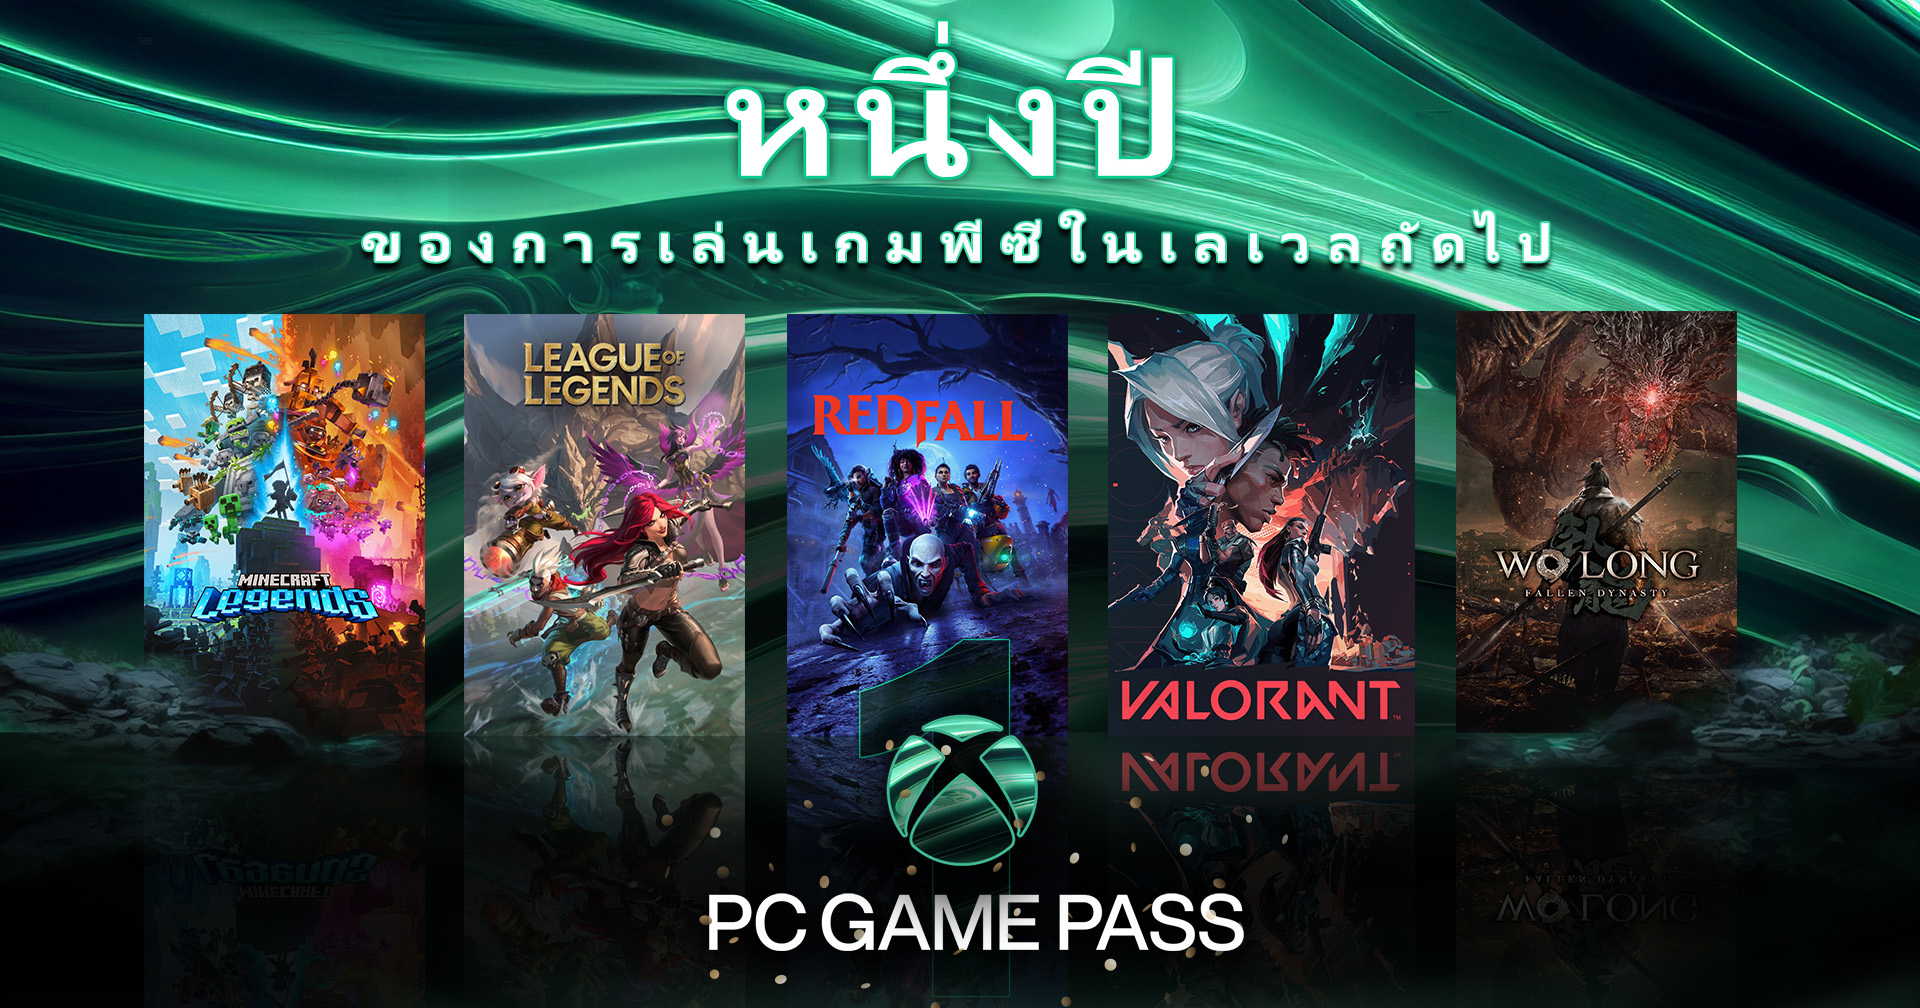 Xbox ส่งต่อคำขอบคุณ เนื่องในโอกาสฉลองครบรอบหนึ่งปี PC Game Pass ในเอเชียตะวันออกเฉียงใต้